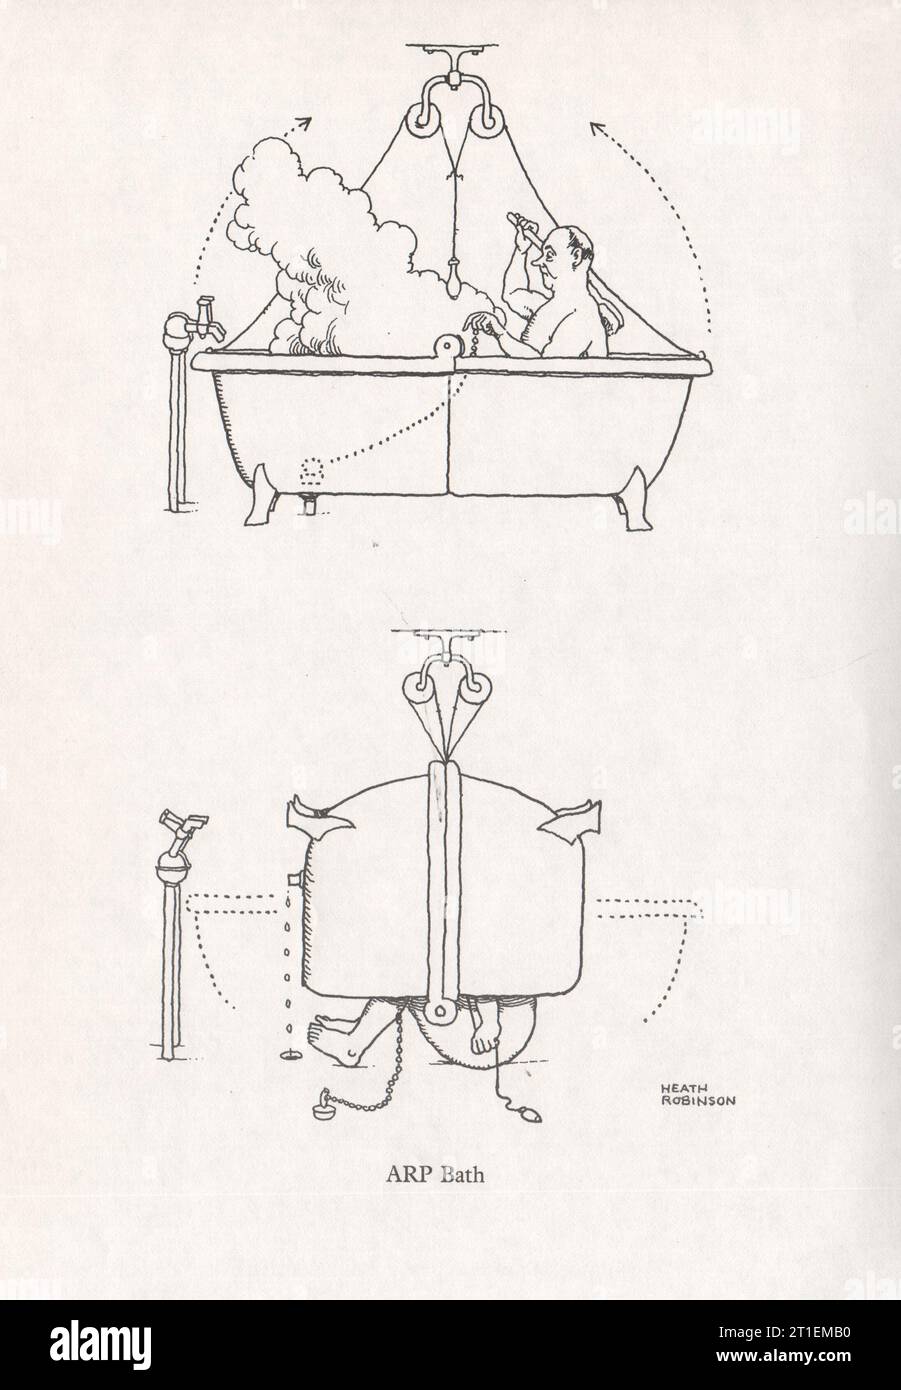 A CARGO DE HEATH ROBINSON. Baño ARP. Segunda Guerra Mundial. Air RAID Precautions 1973 print Foto de stock